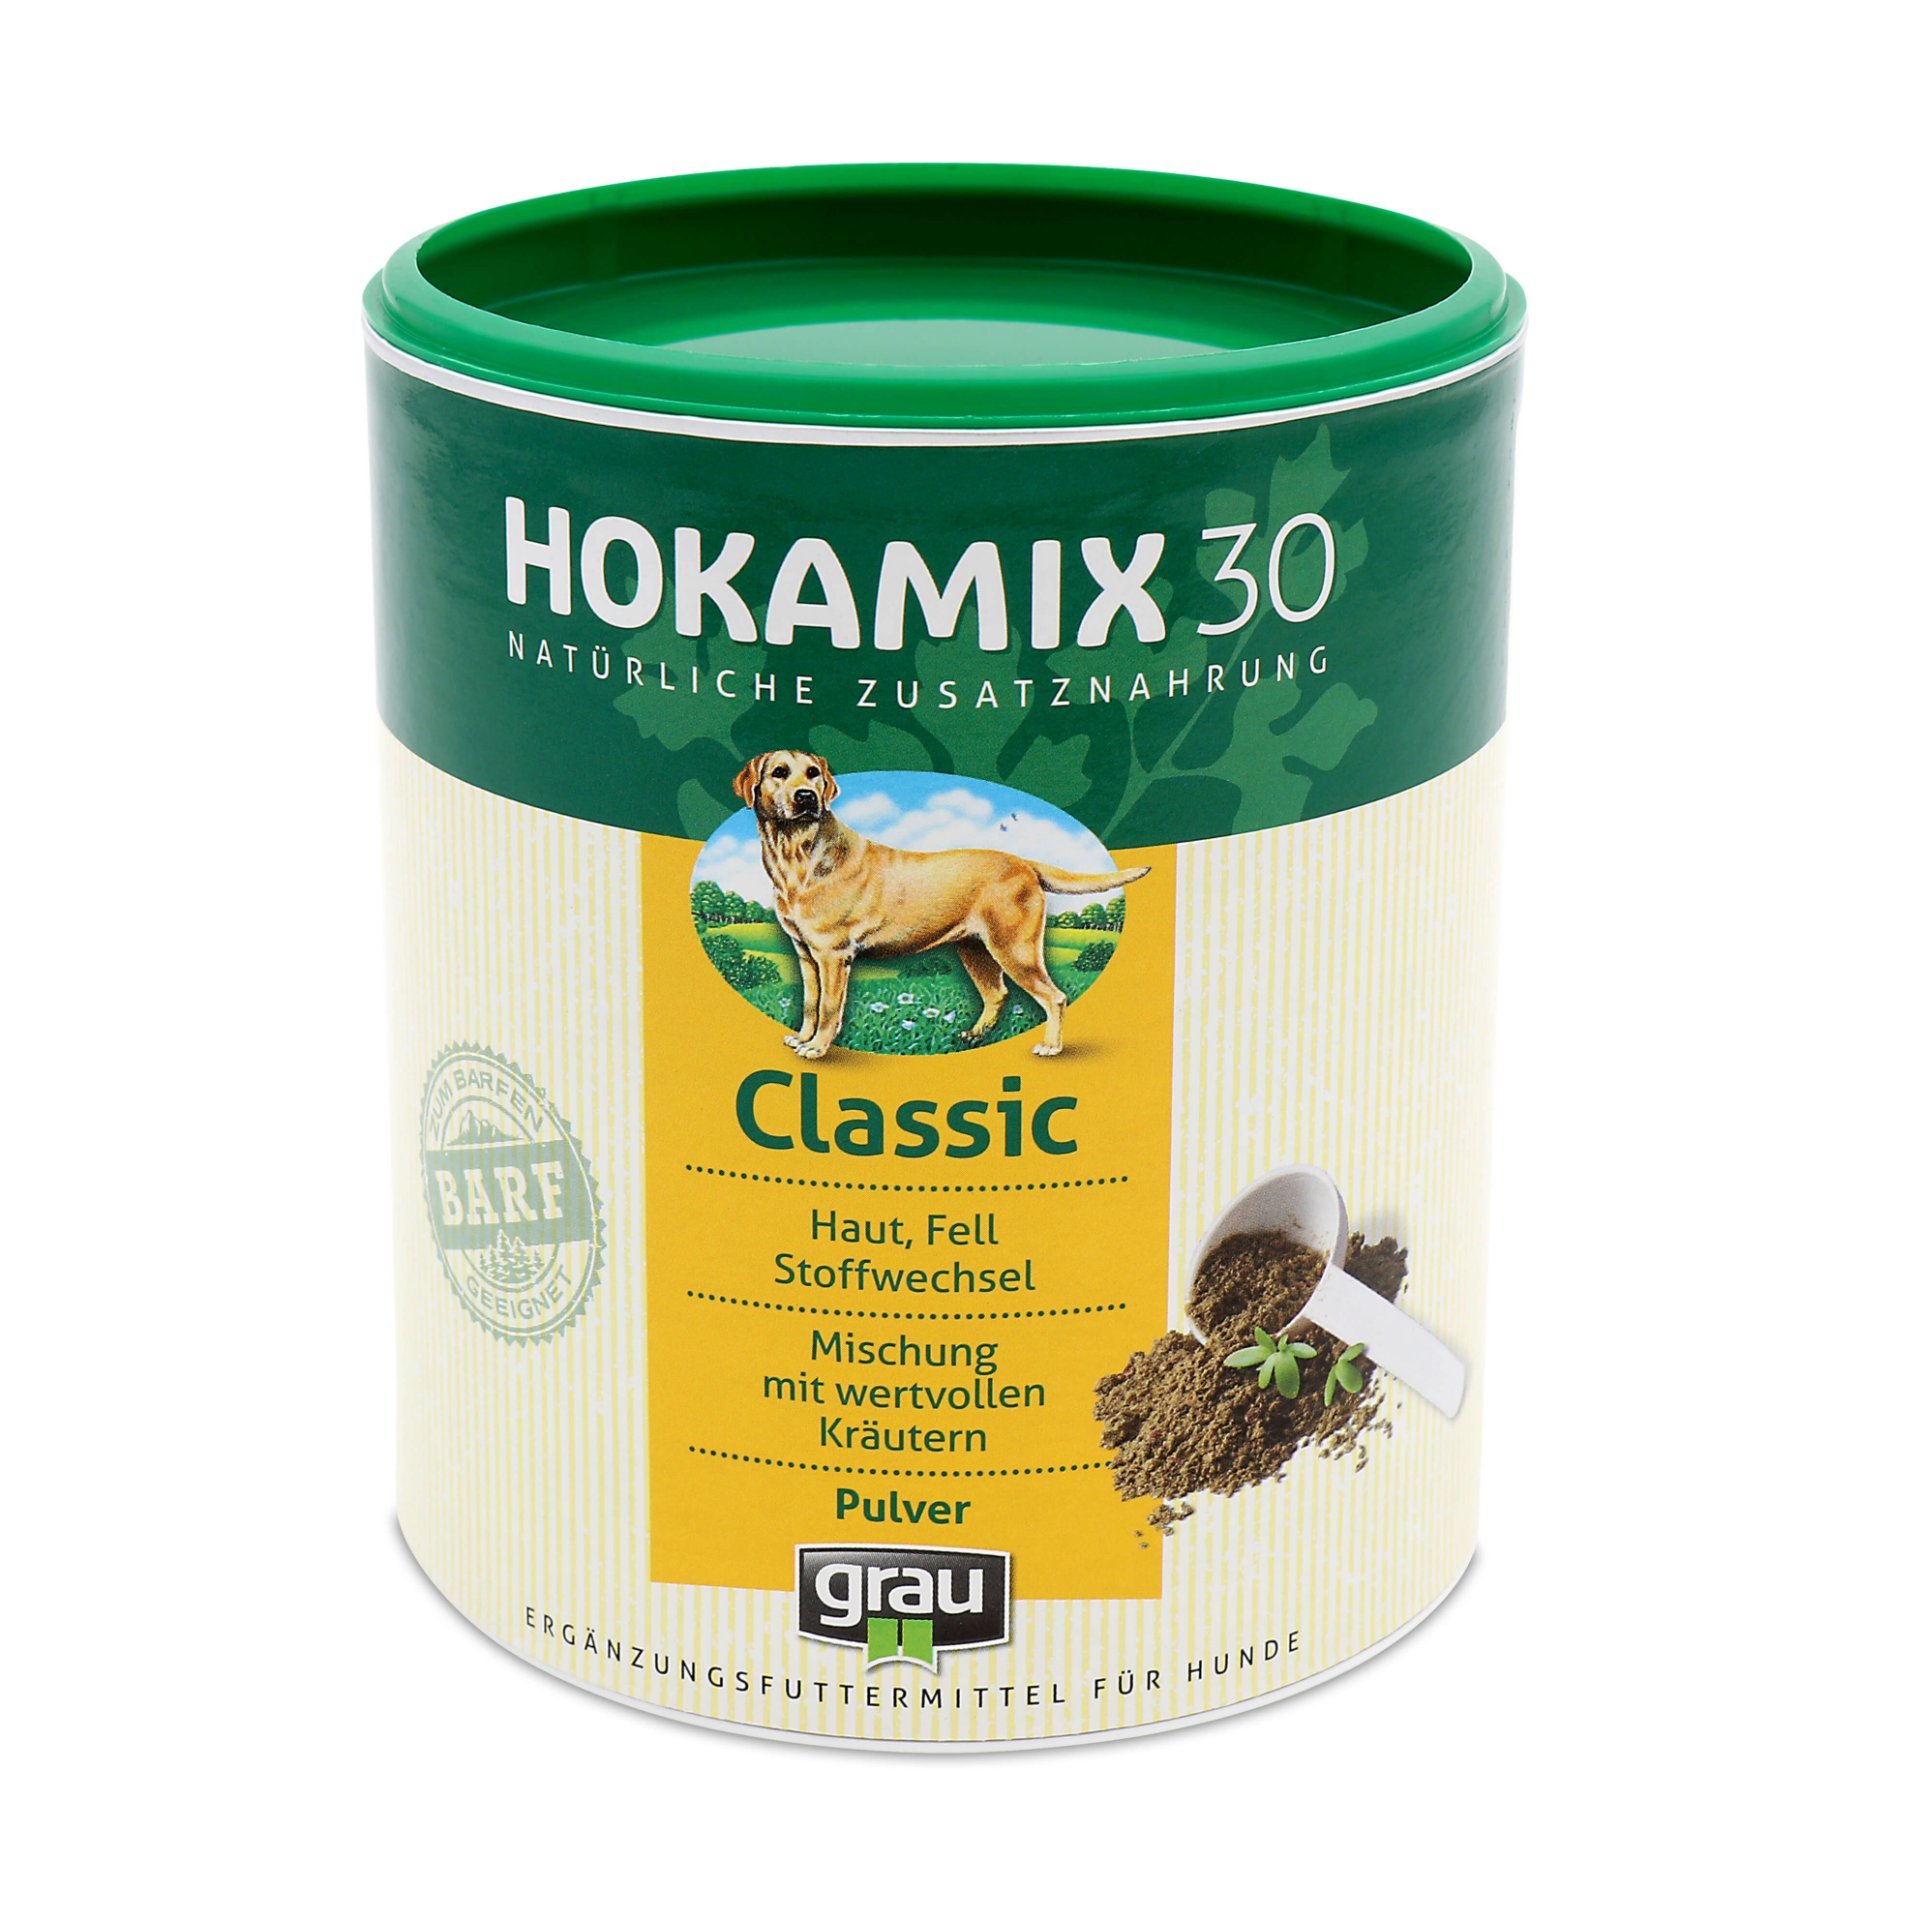 Grau - Hokamix 30 Classic 400g